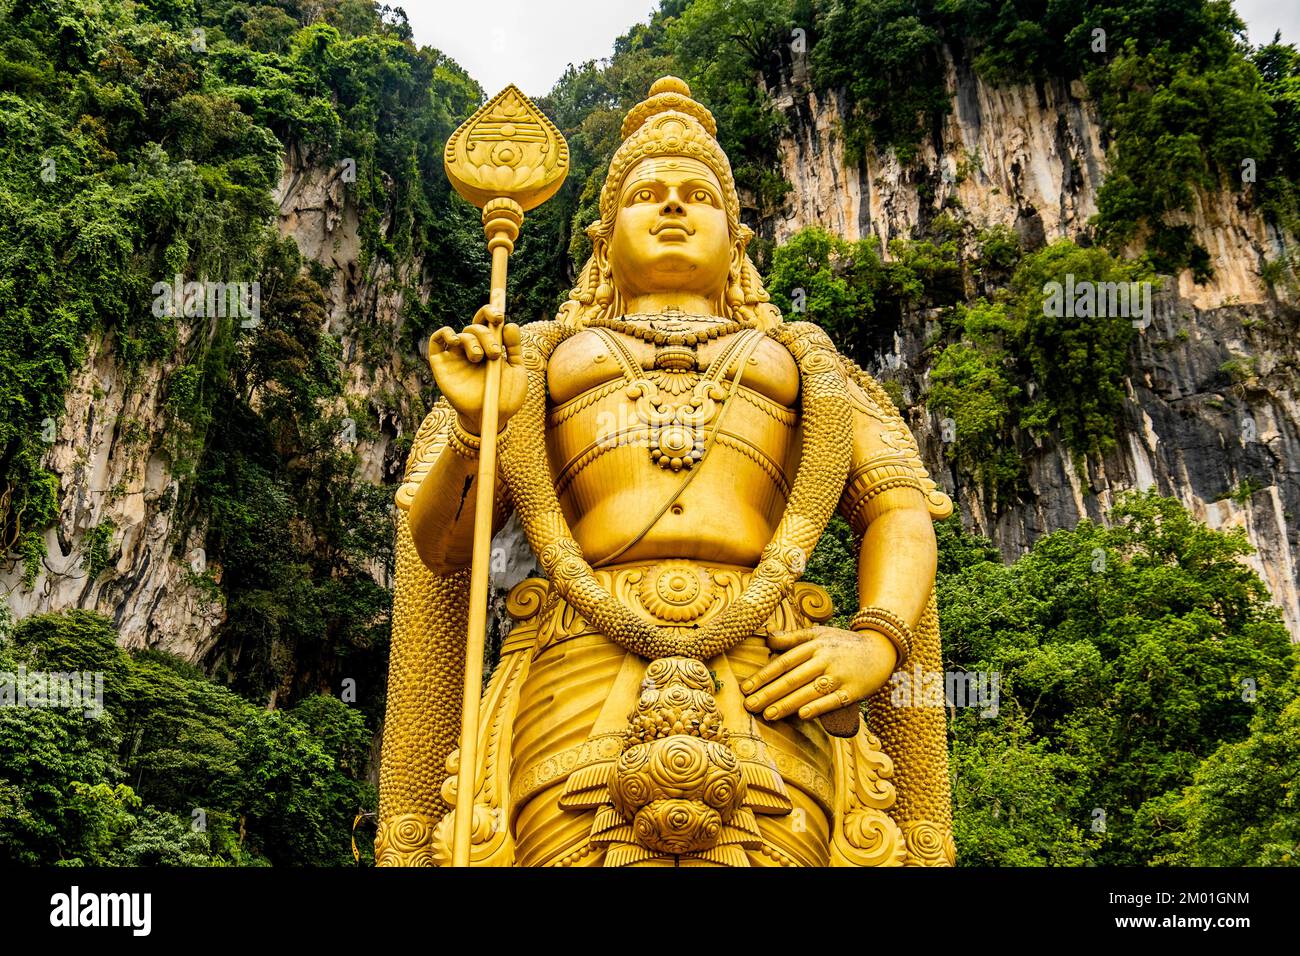 Lord Murugan at the Batu Caves in Gombak, Selangor, Malaysia, Asia ...